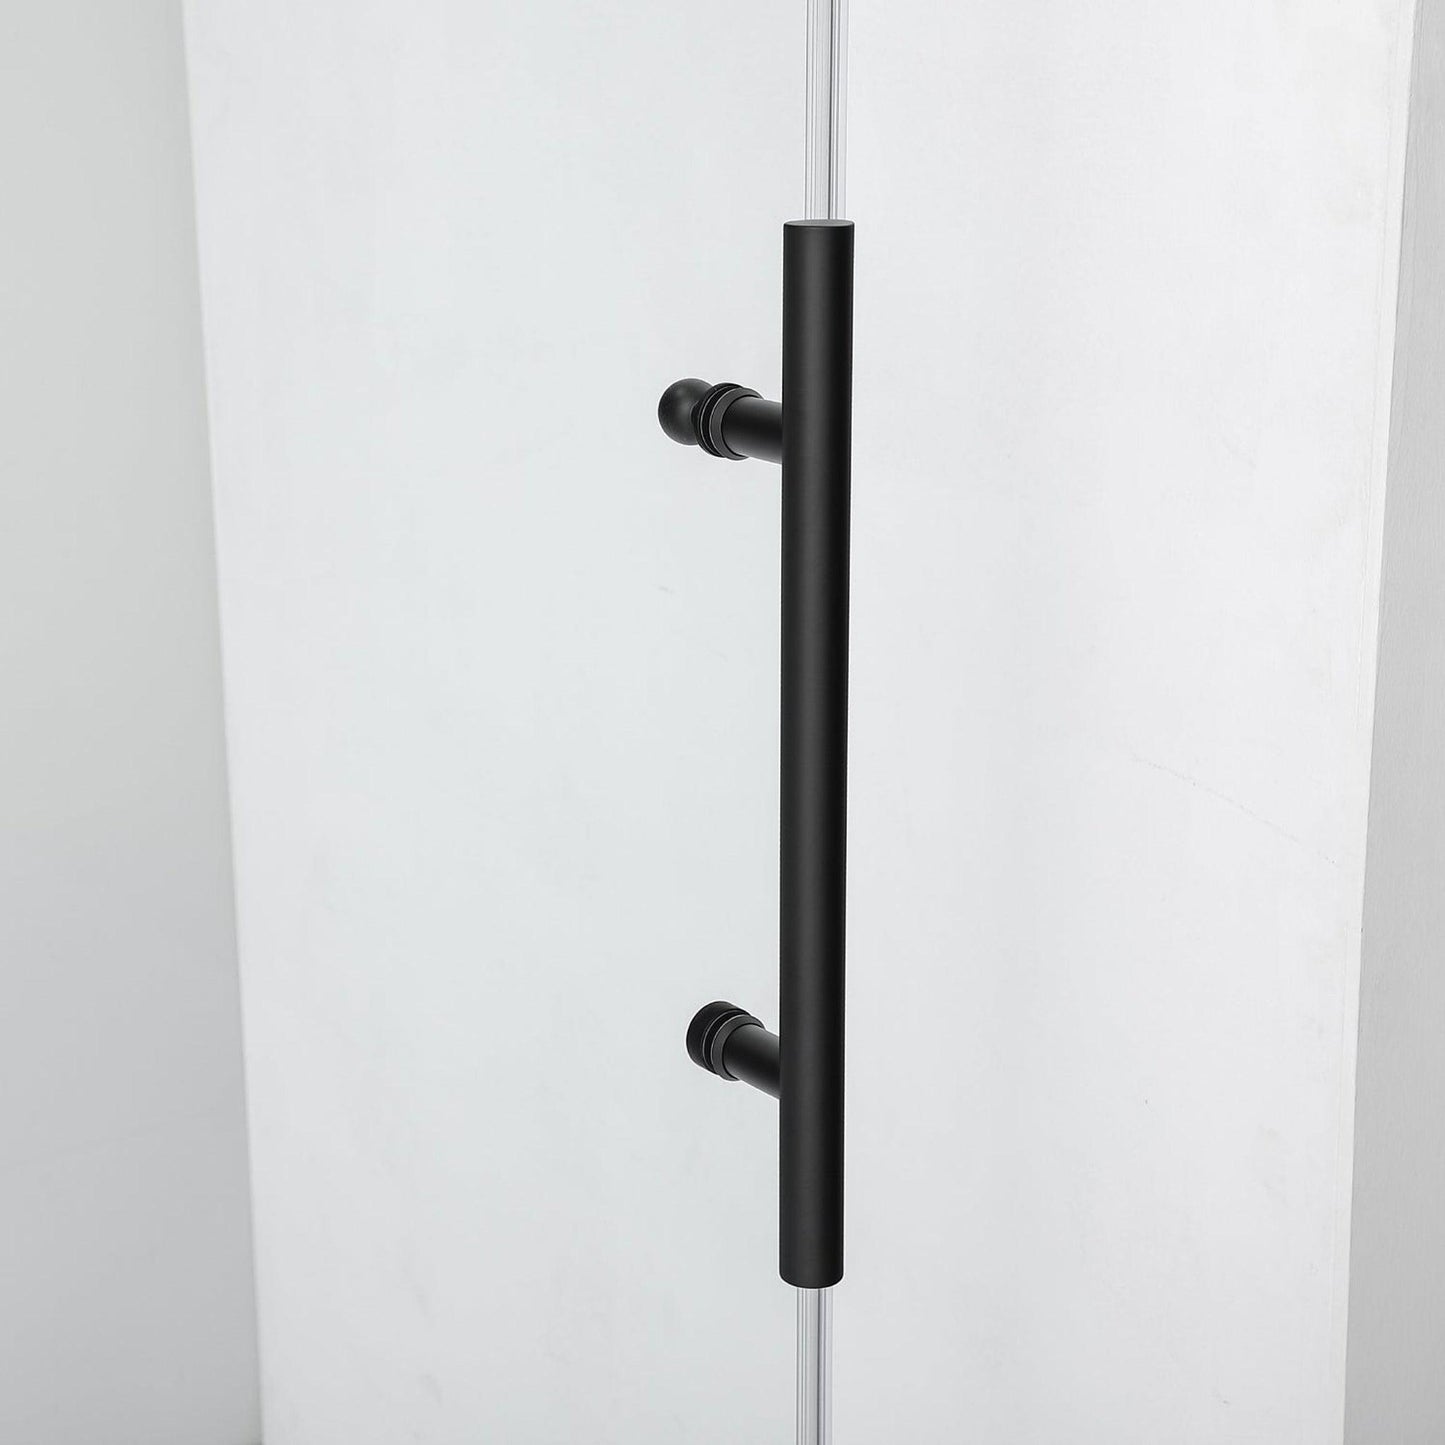 Vinnova Villena 60" x 78" Matte Black Single Sliding Frameless Shower Door